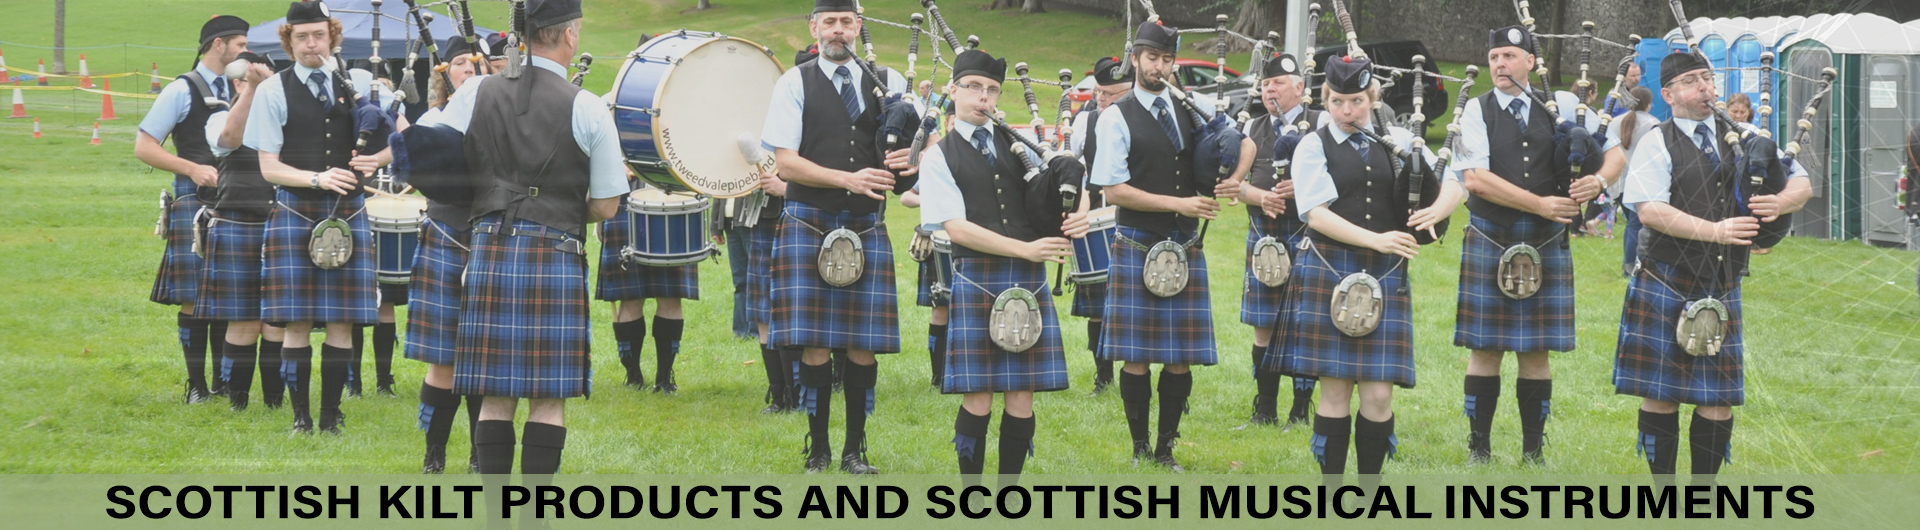 Scottish kilts & Instruments Banner